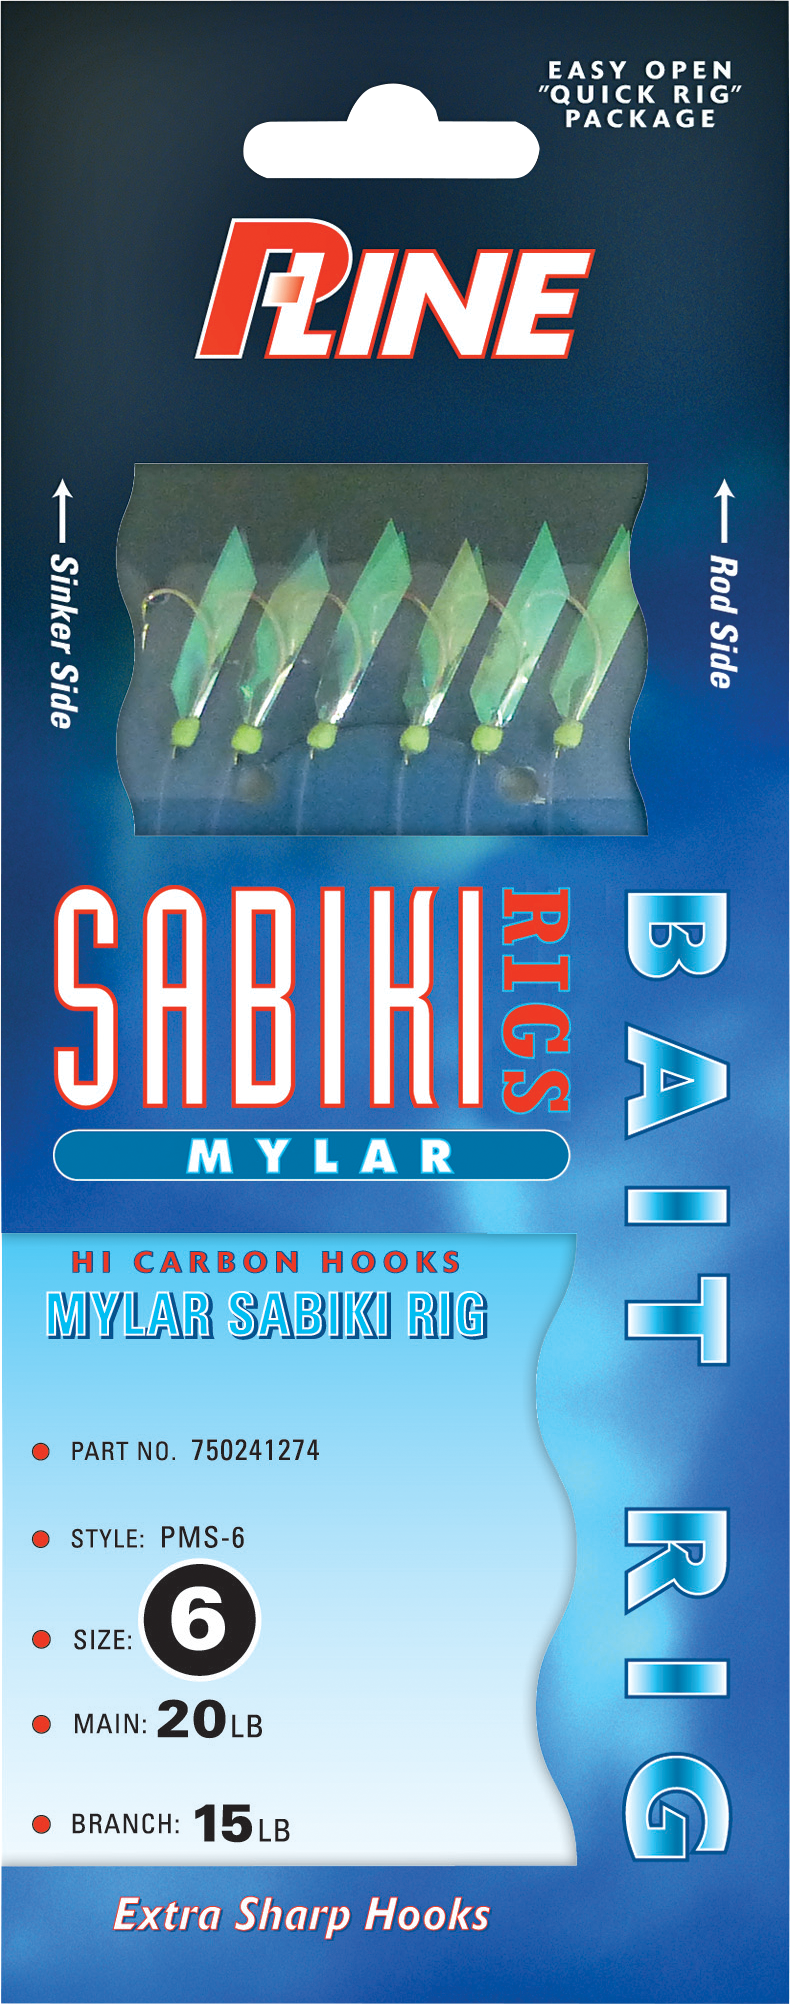 P-Line Mylar Sabiki Rigs - 4